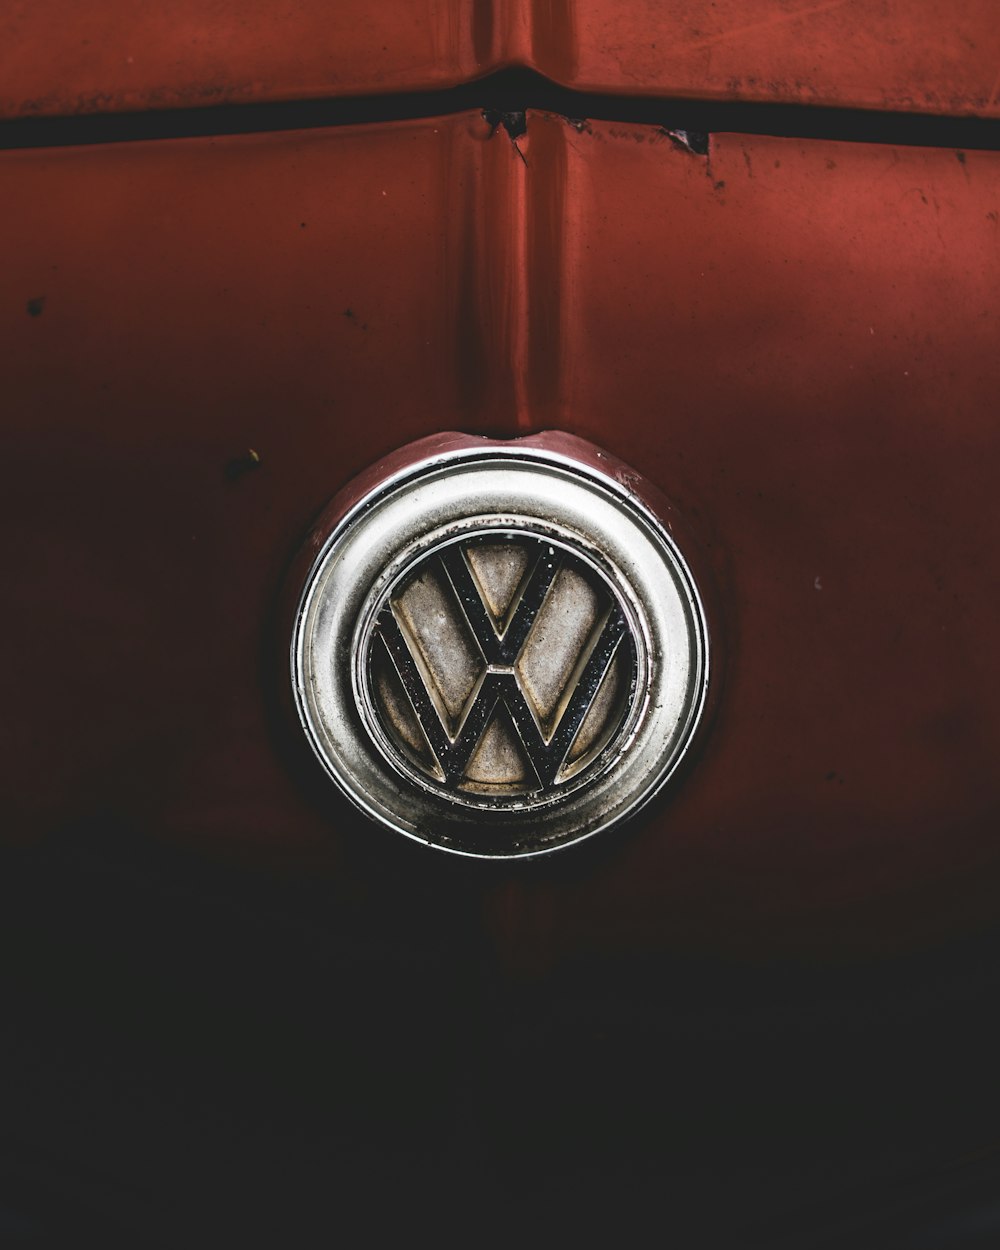 Volkswagen Logo Pictures  Download Free Images on Unsplash